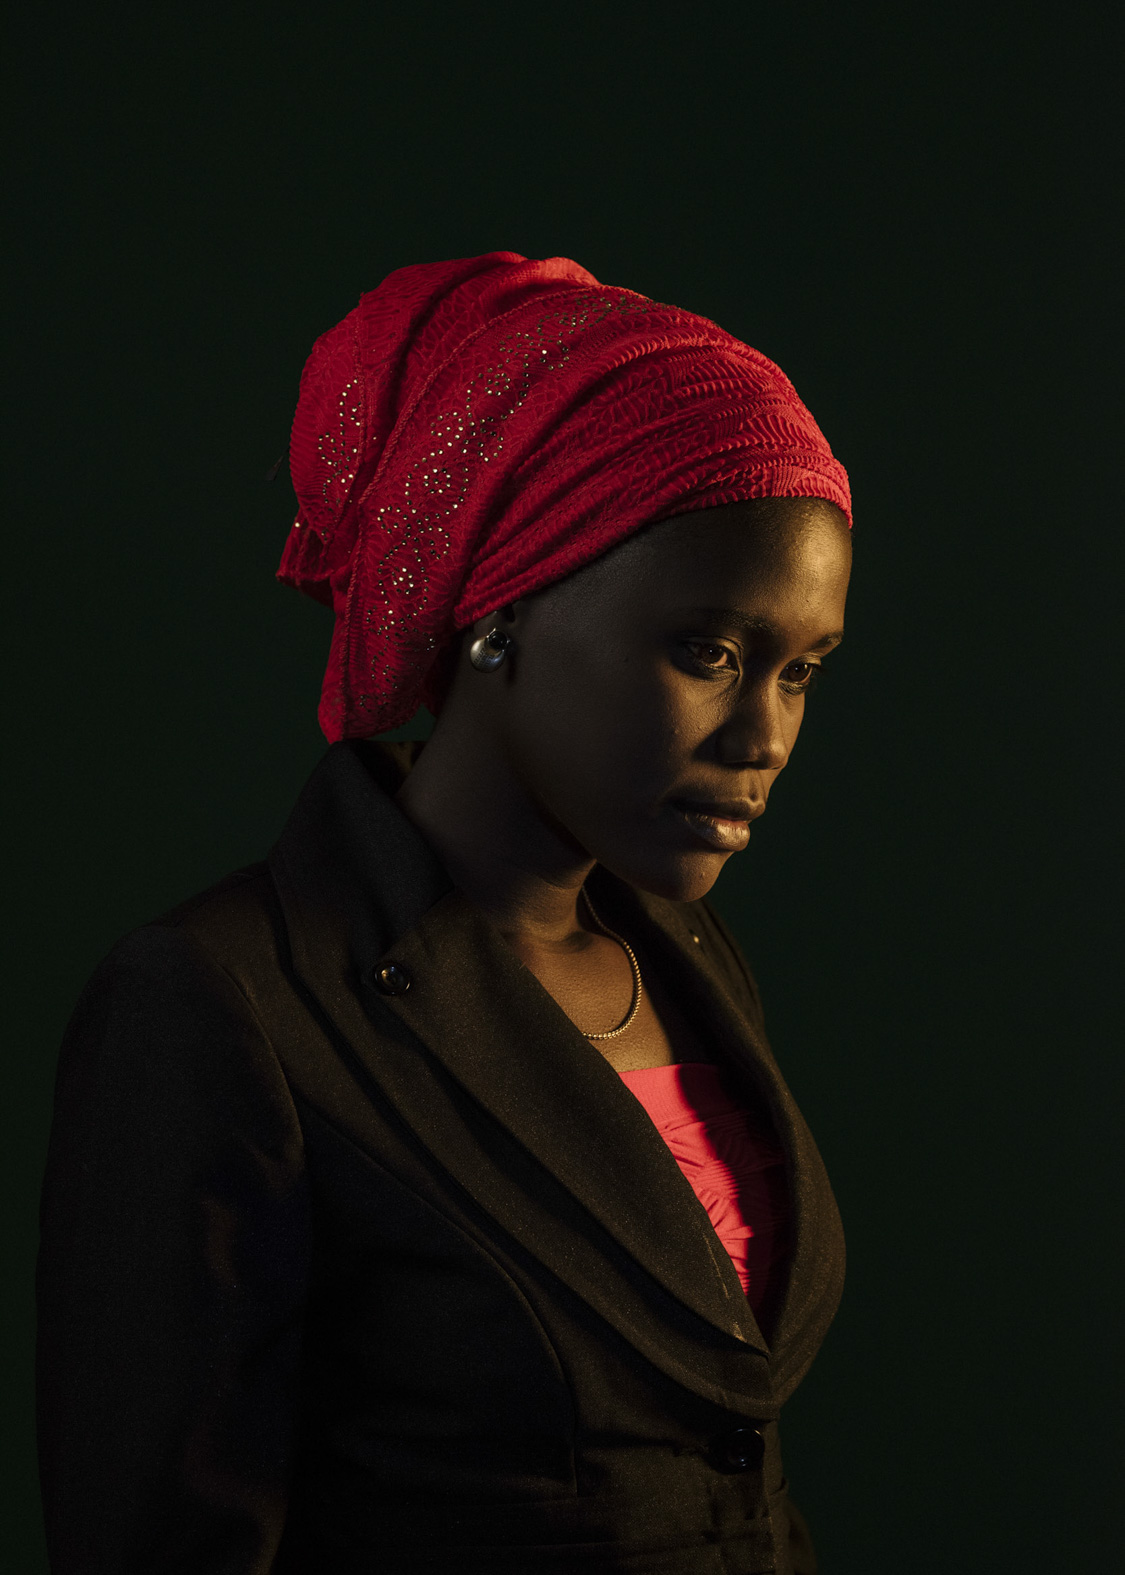  Deborah Andrawus, ‘Chibok Girl’ for  The New York Times  